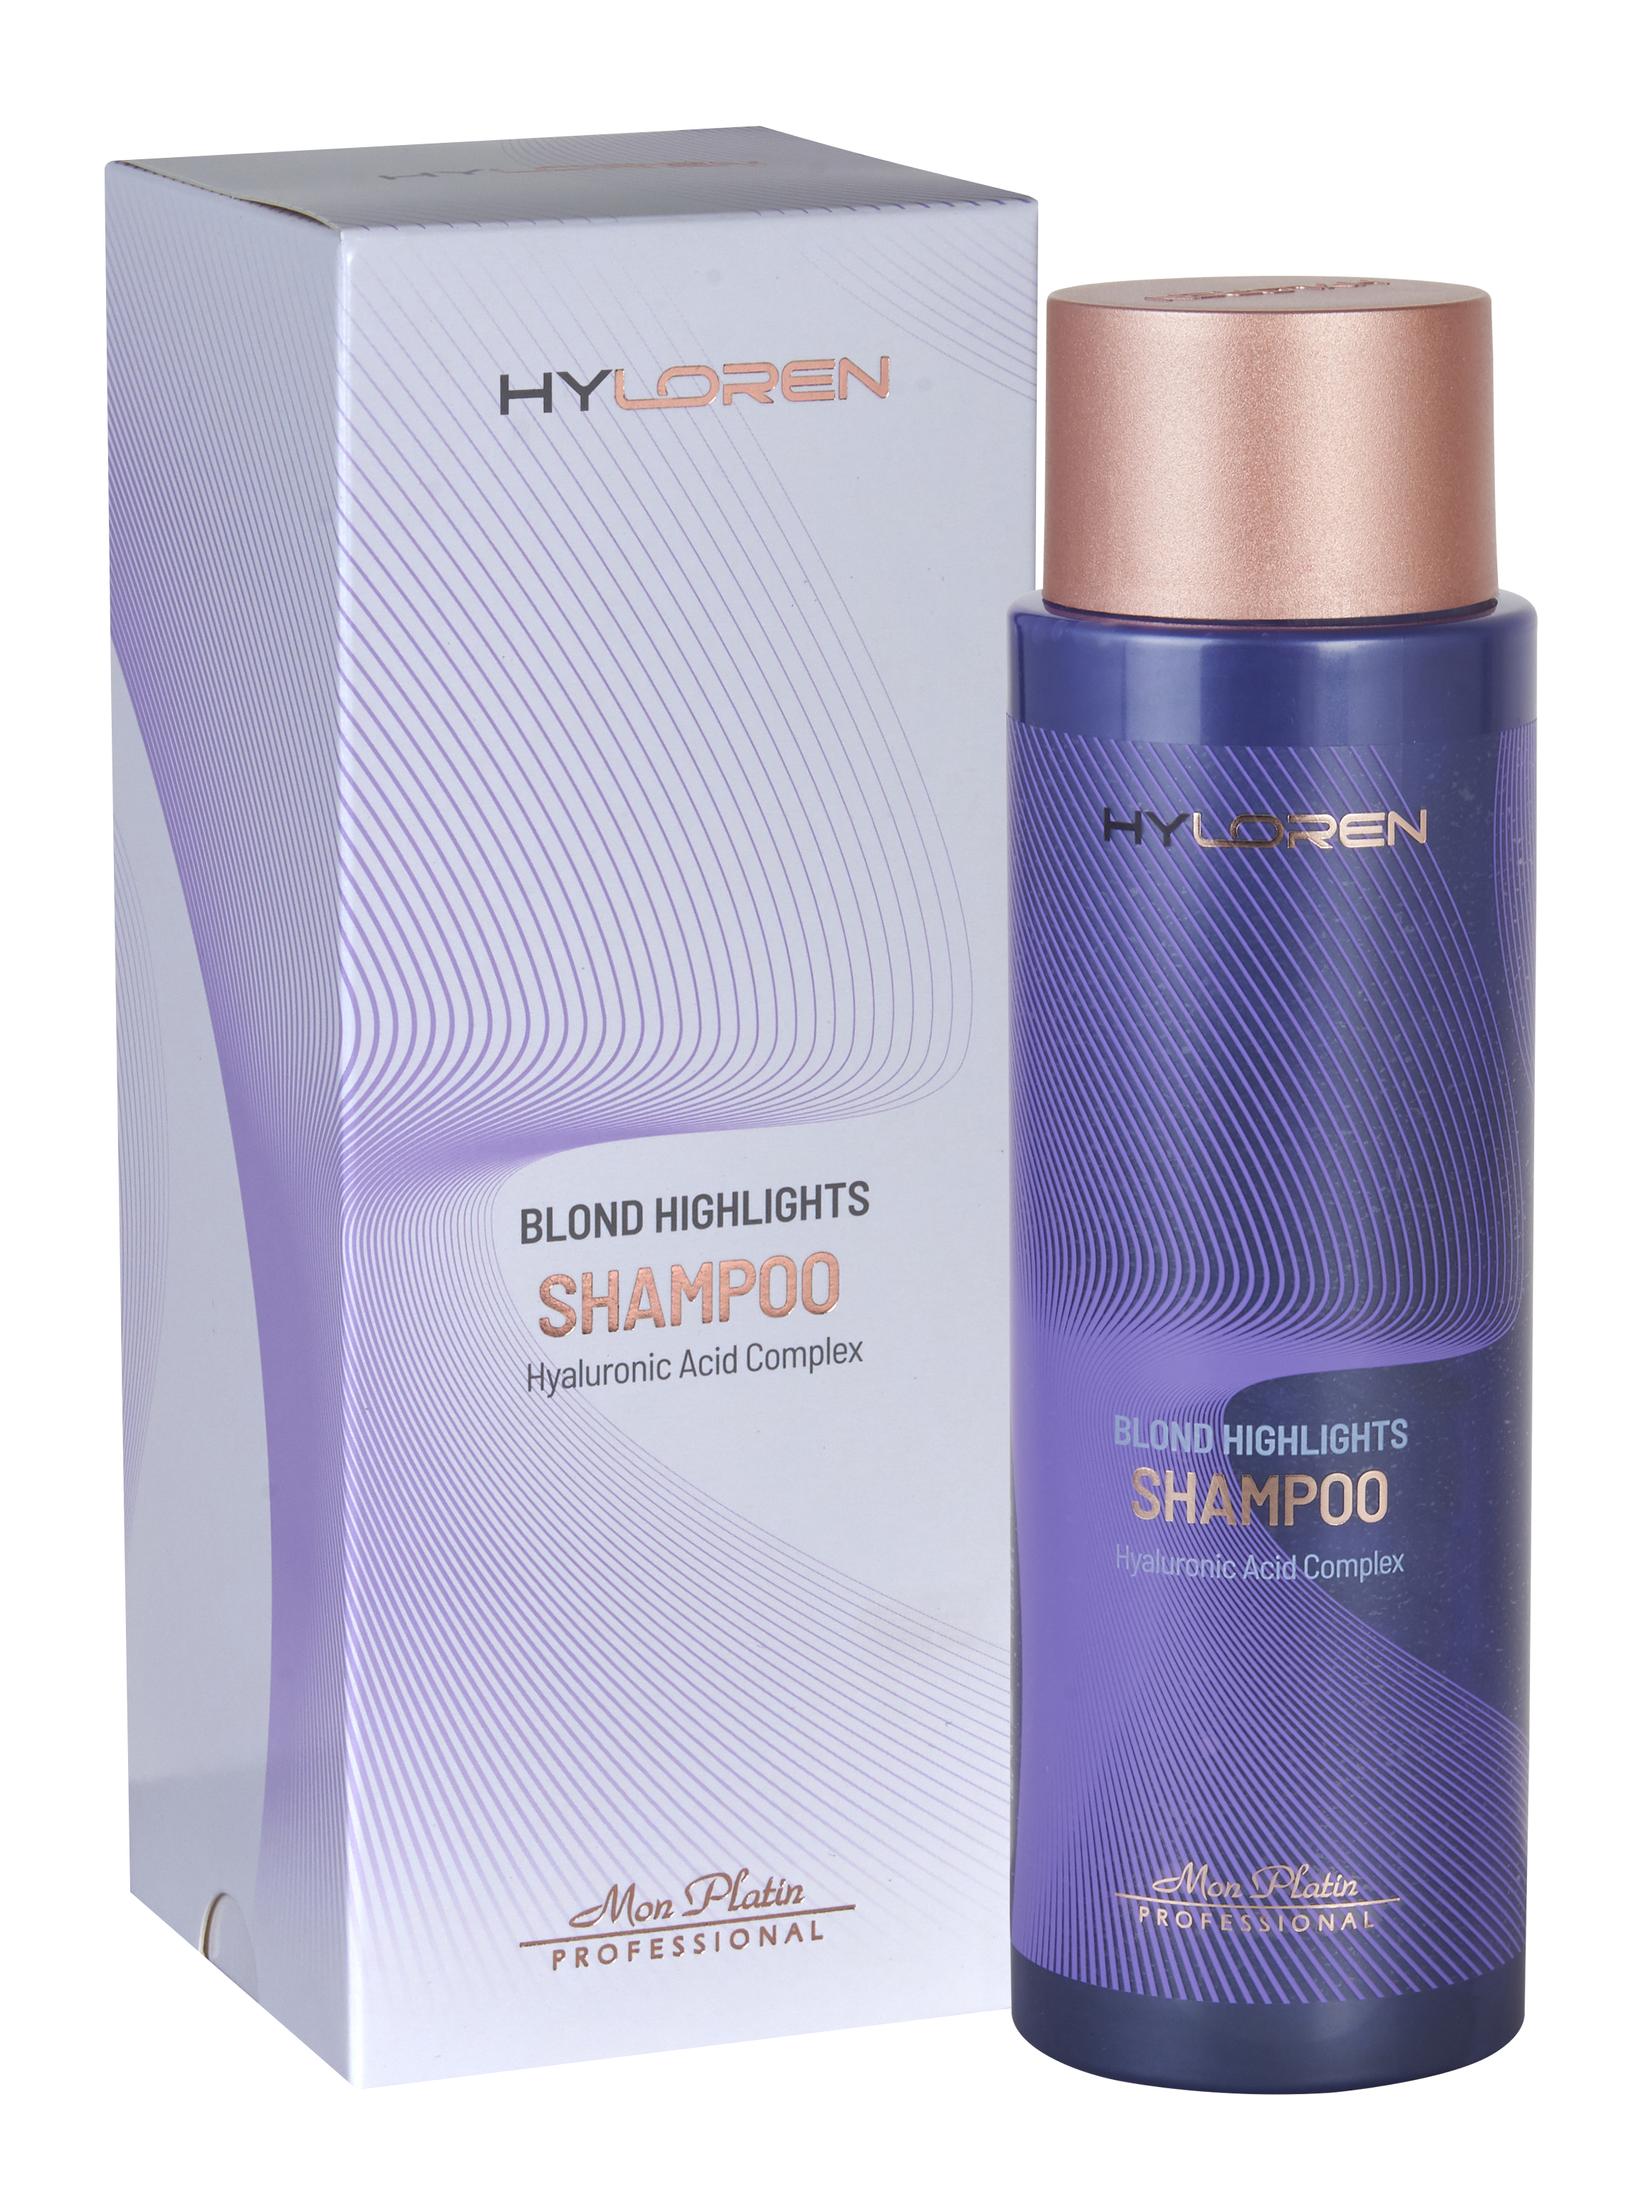 Selected image for MON PLATIN Šampon za pramenove plave kose Hyloren Premium 500ml